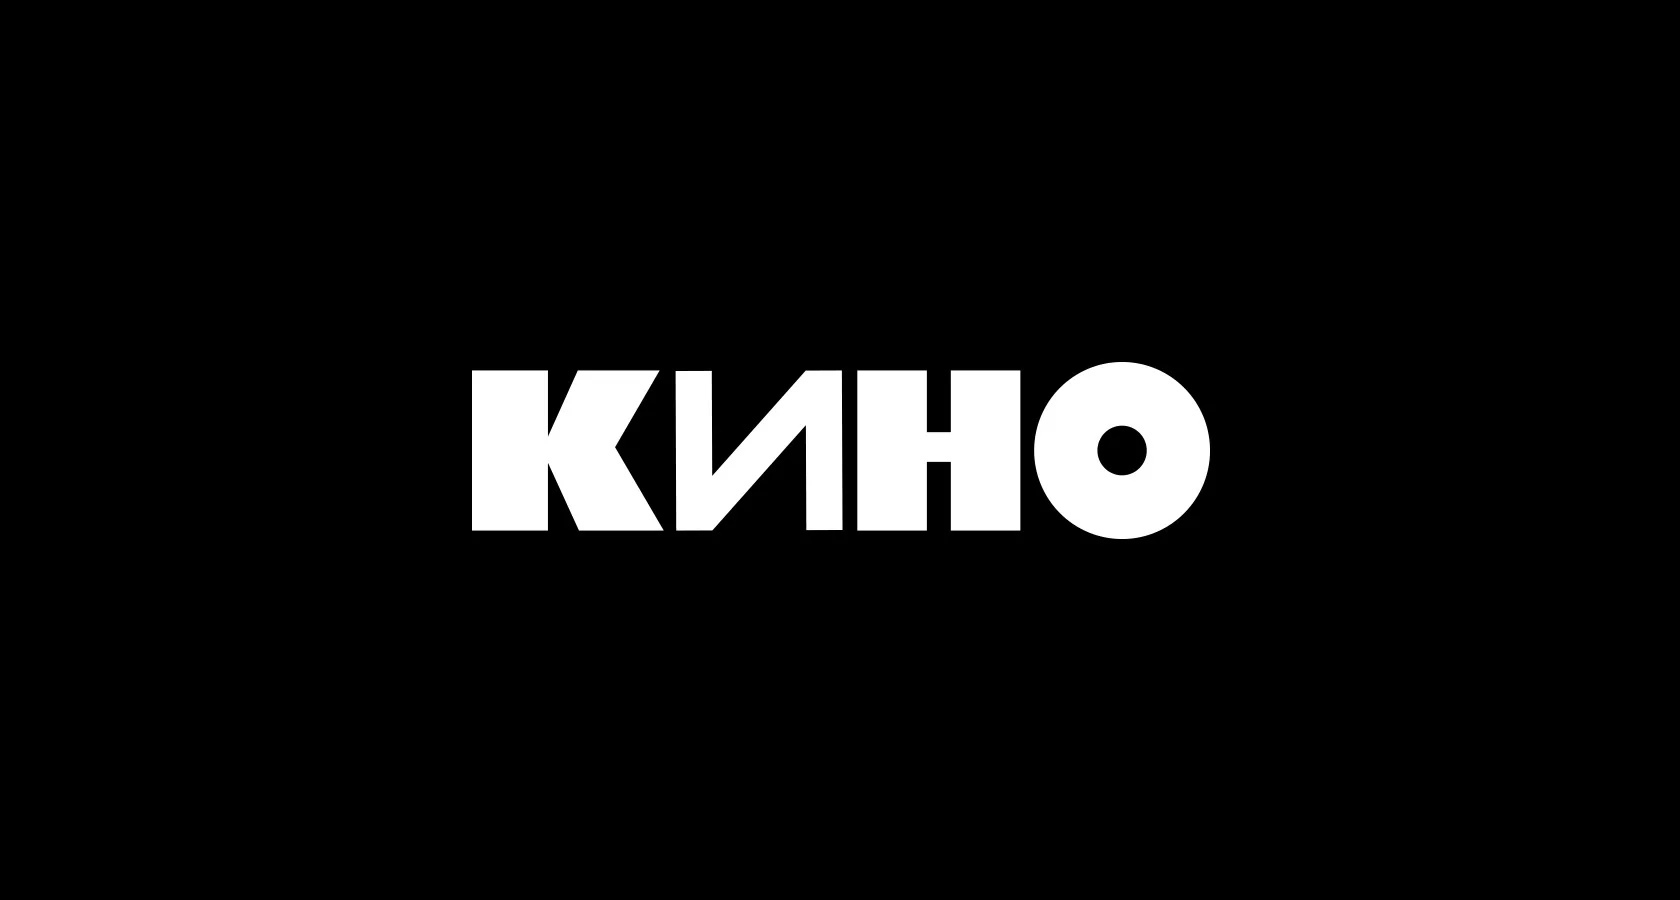 Kino group logo